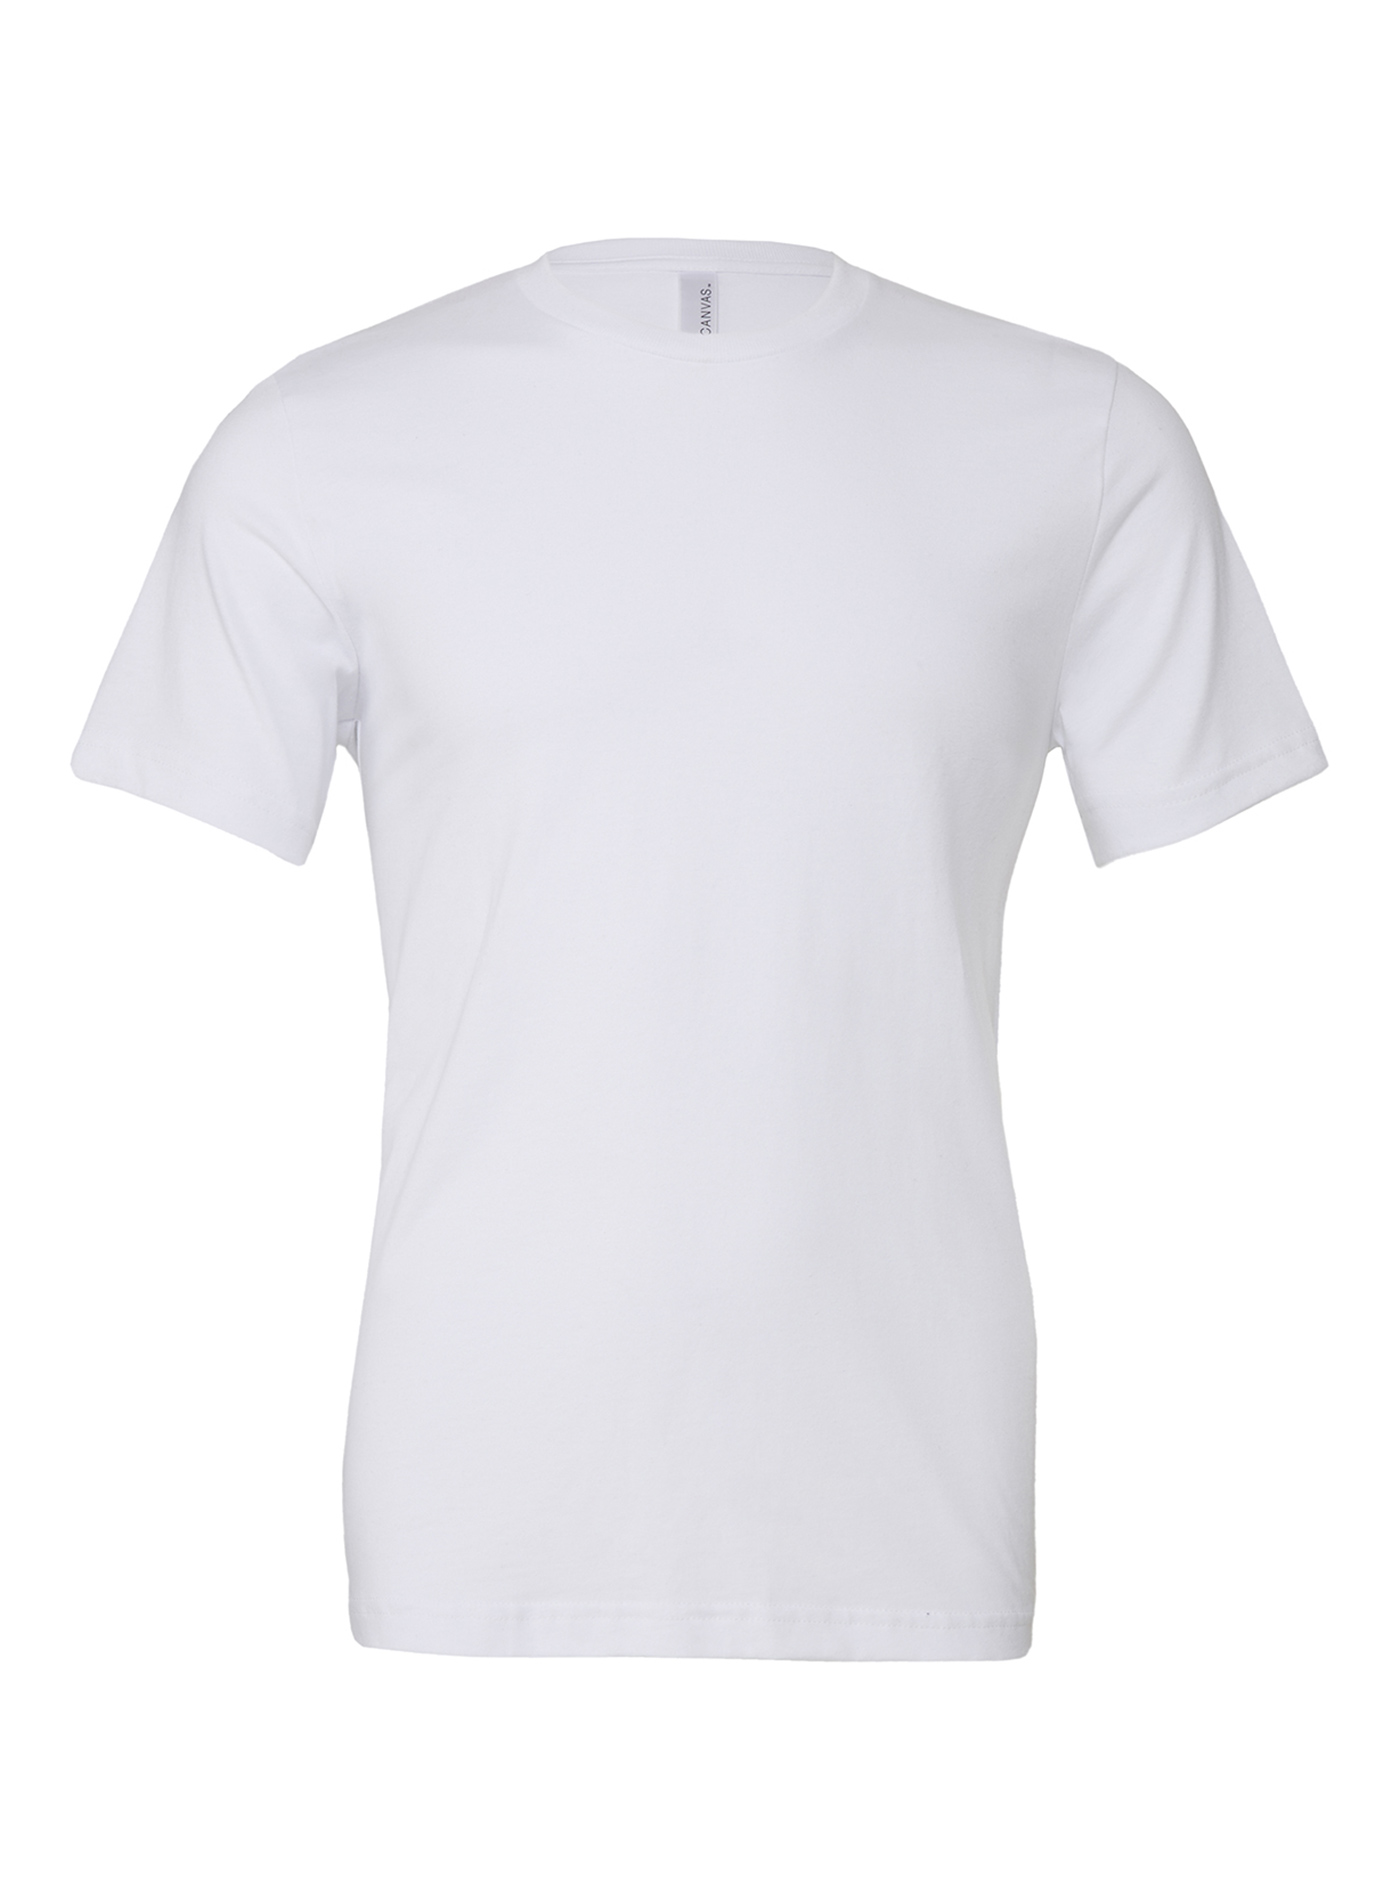 Unisex tričko Bella + Canvas Jersey - Bílá L